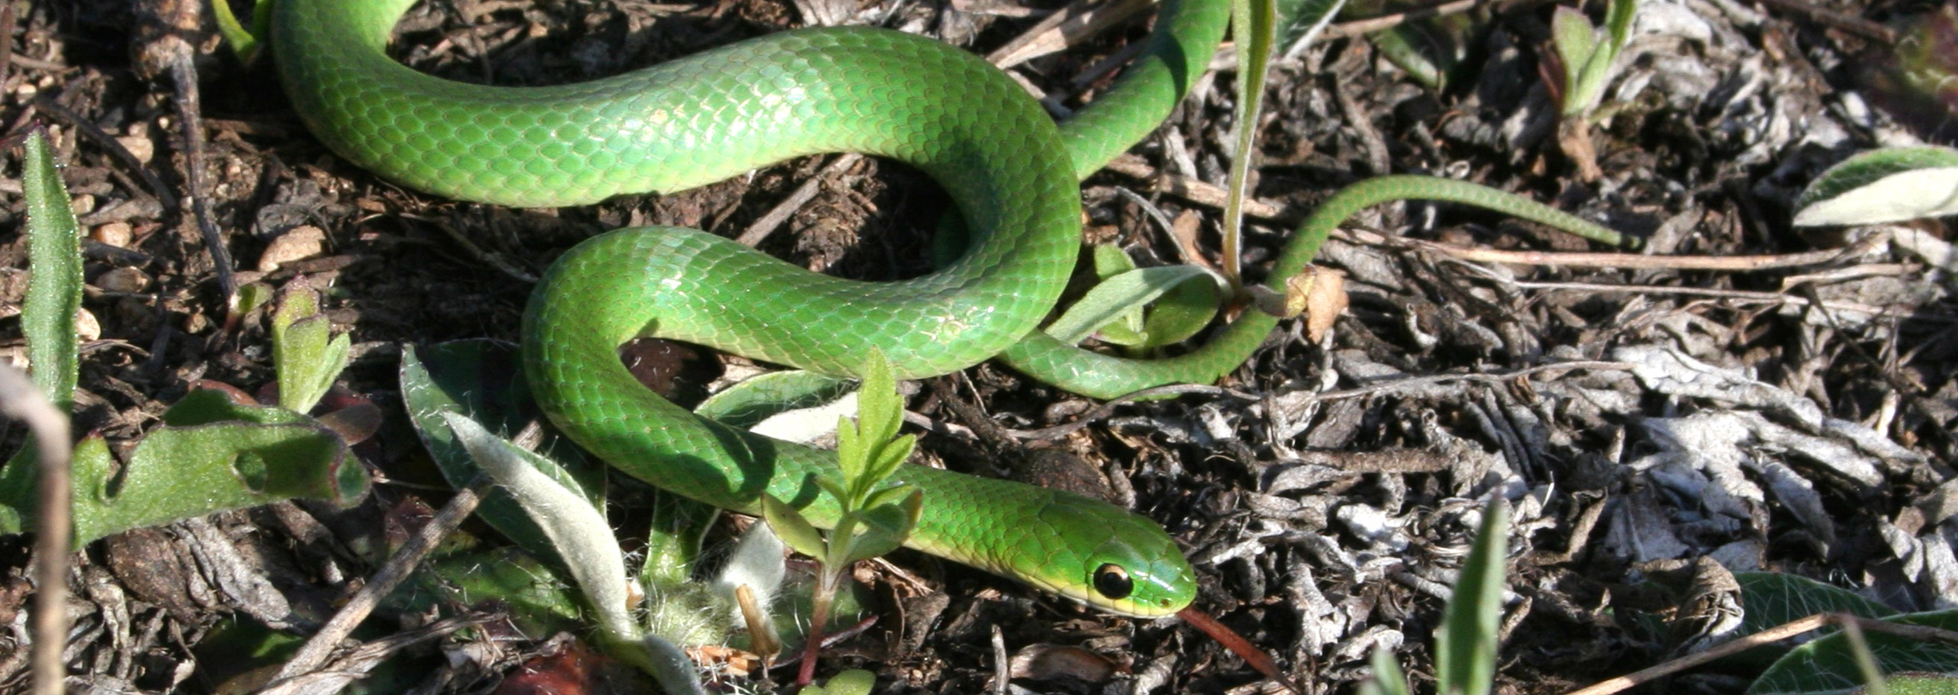 Smooth Greensnake Reptiles Amphibians In Ontario Ontario Nature